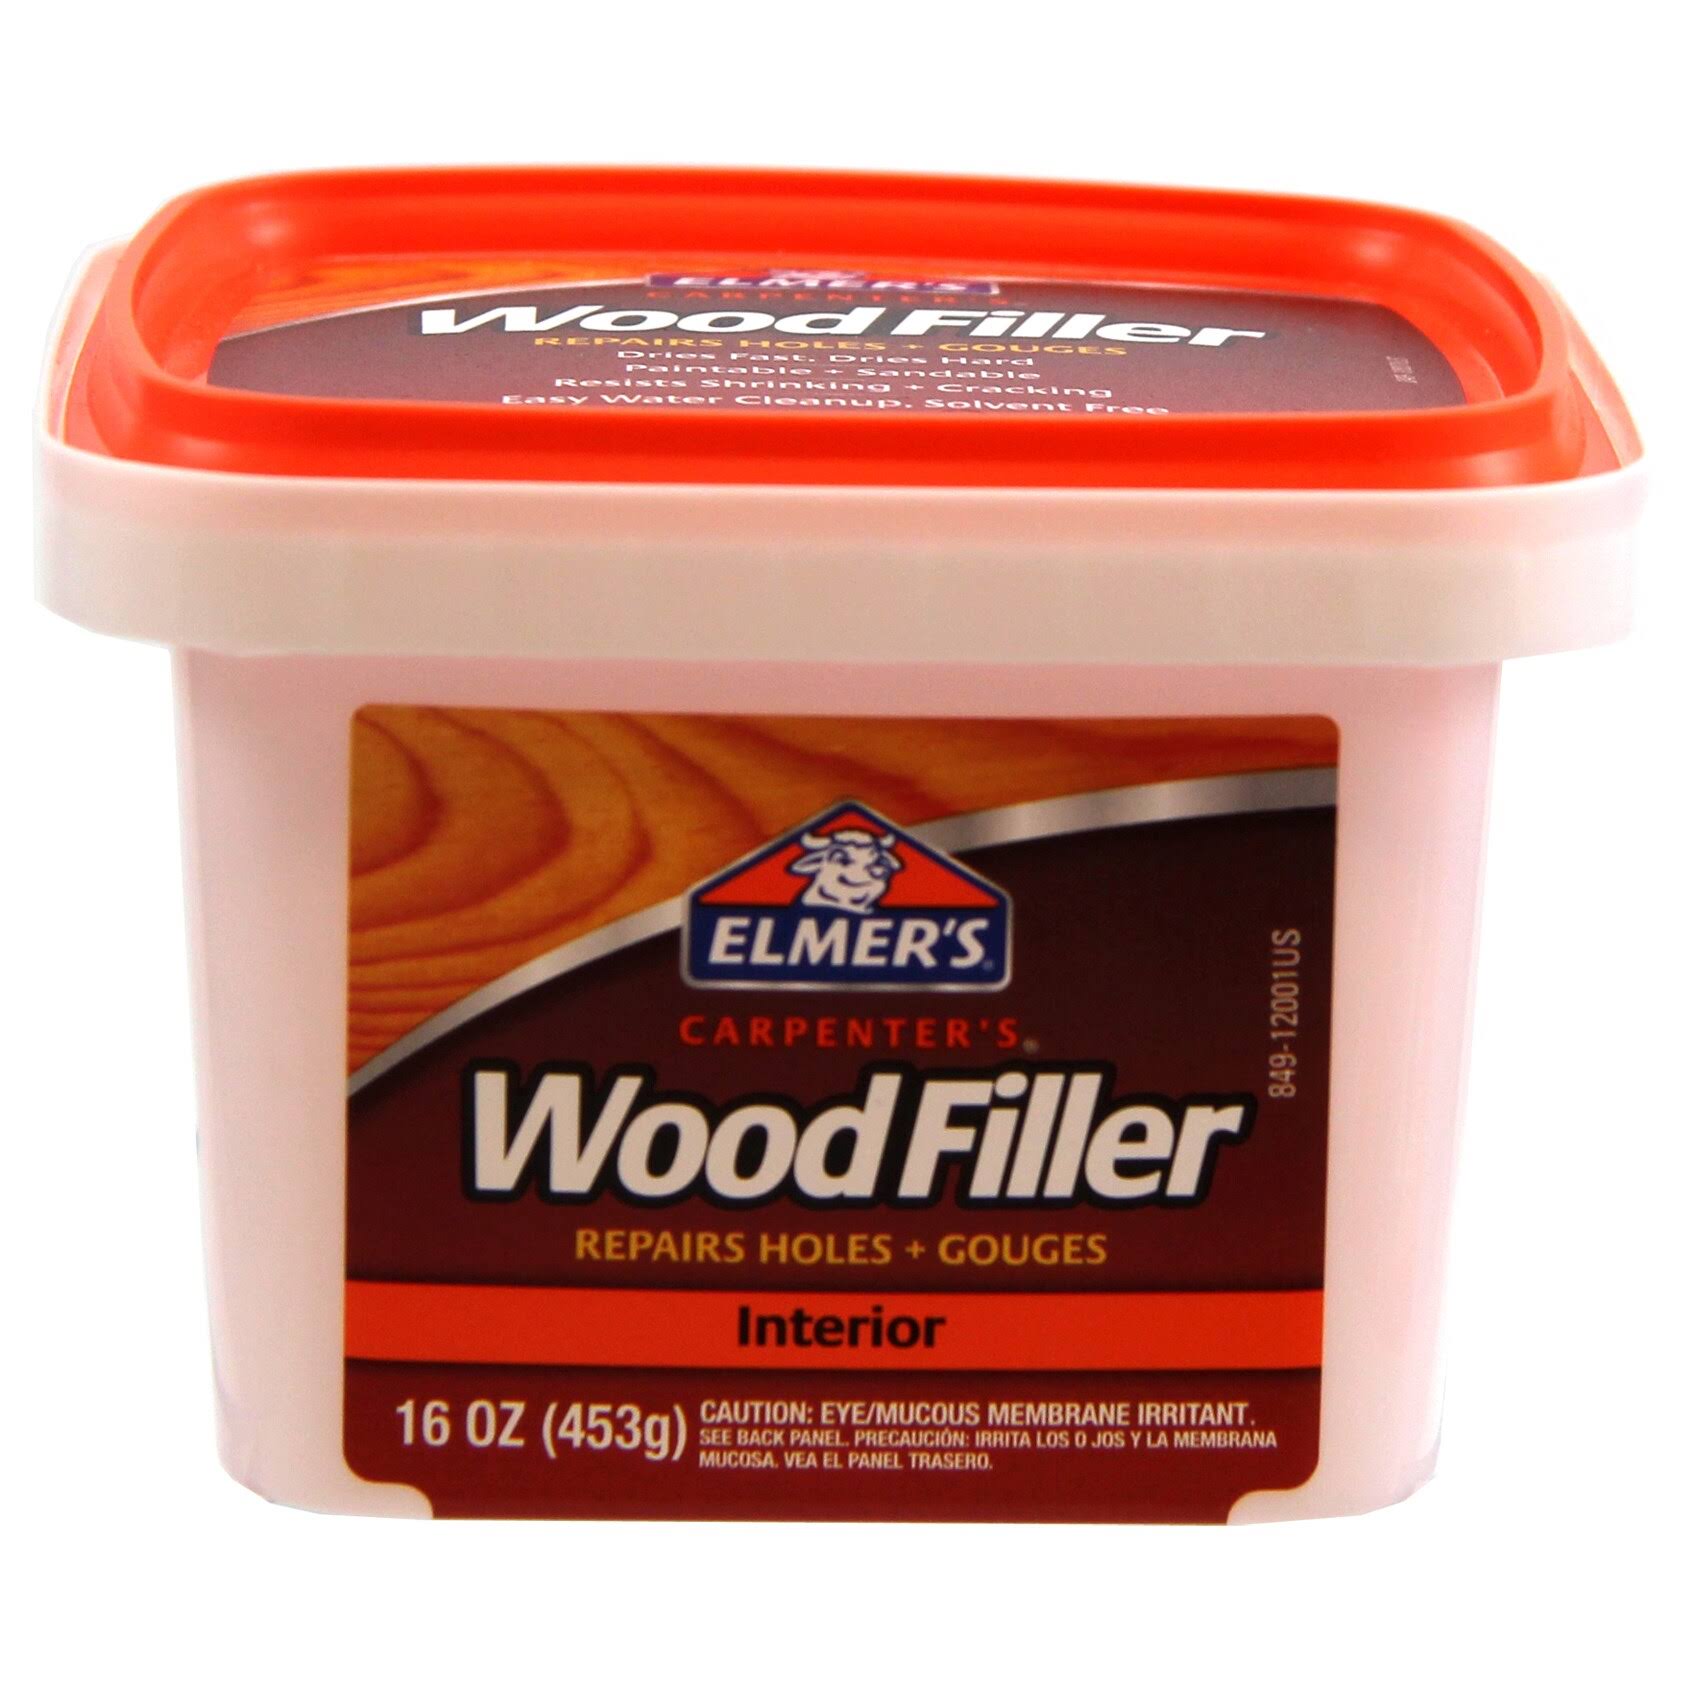 Elmers Carpenter's Wood Filler - 16oz